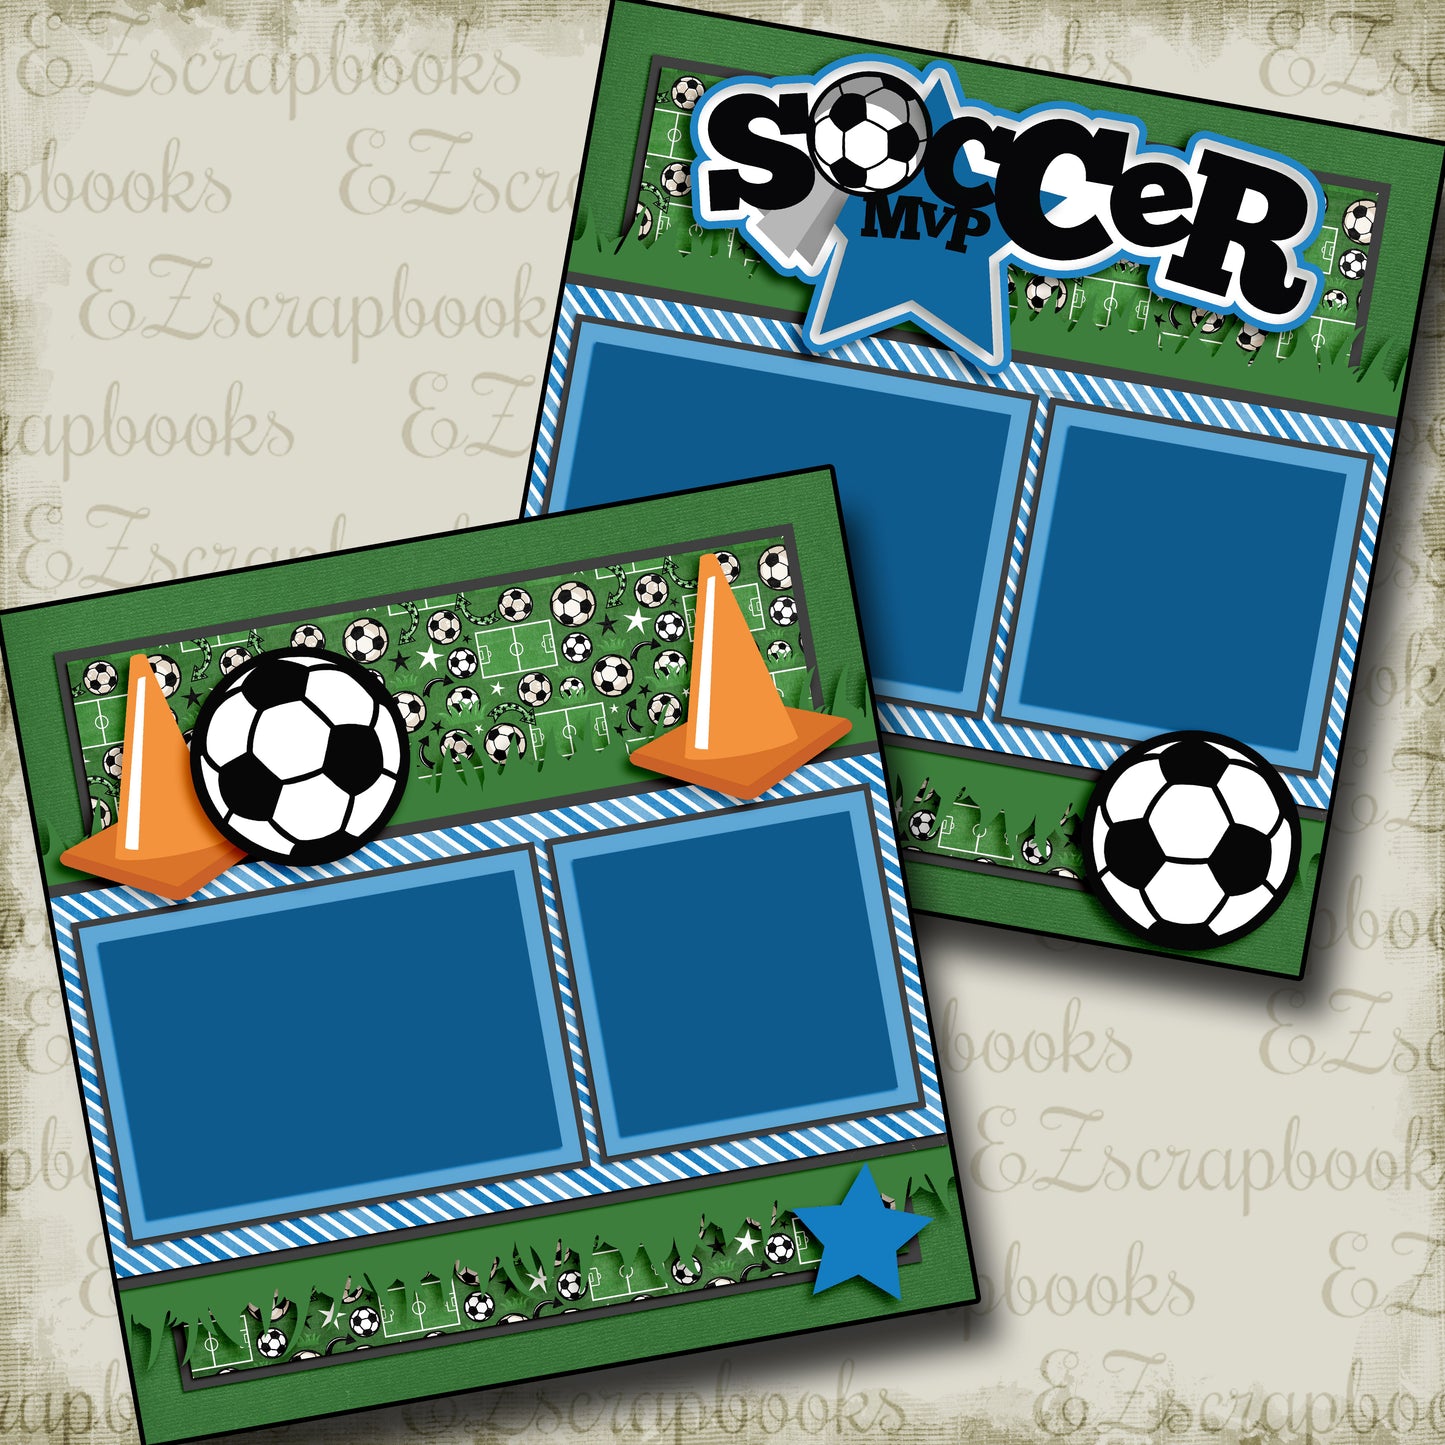 Soccer MVP Blue - 3320 - EZscrapbooks Scrapbook Layouts soccer, Sports